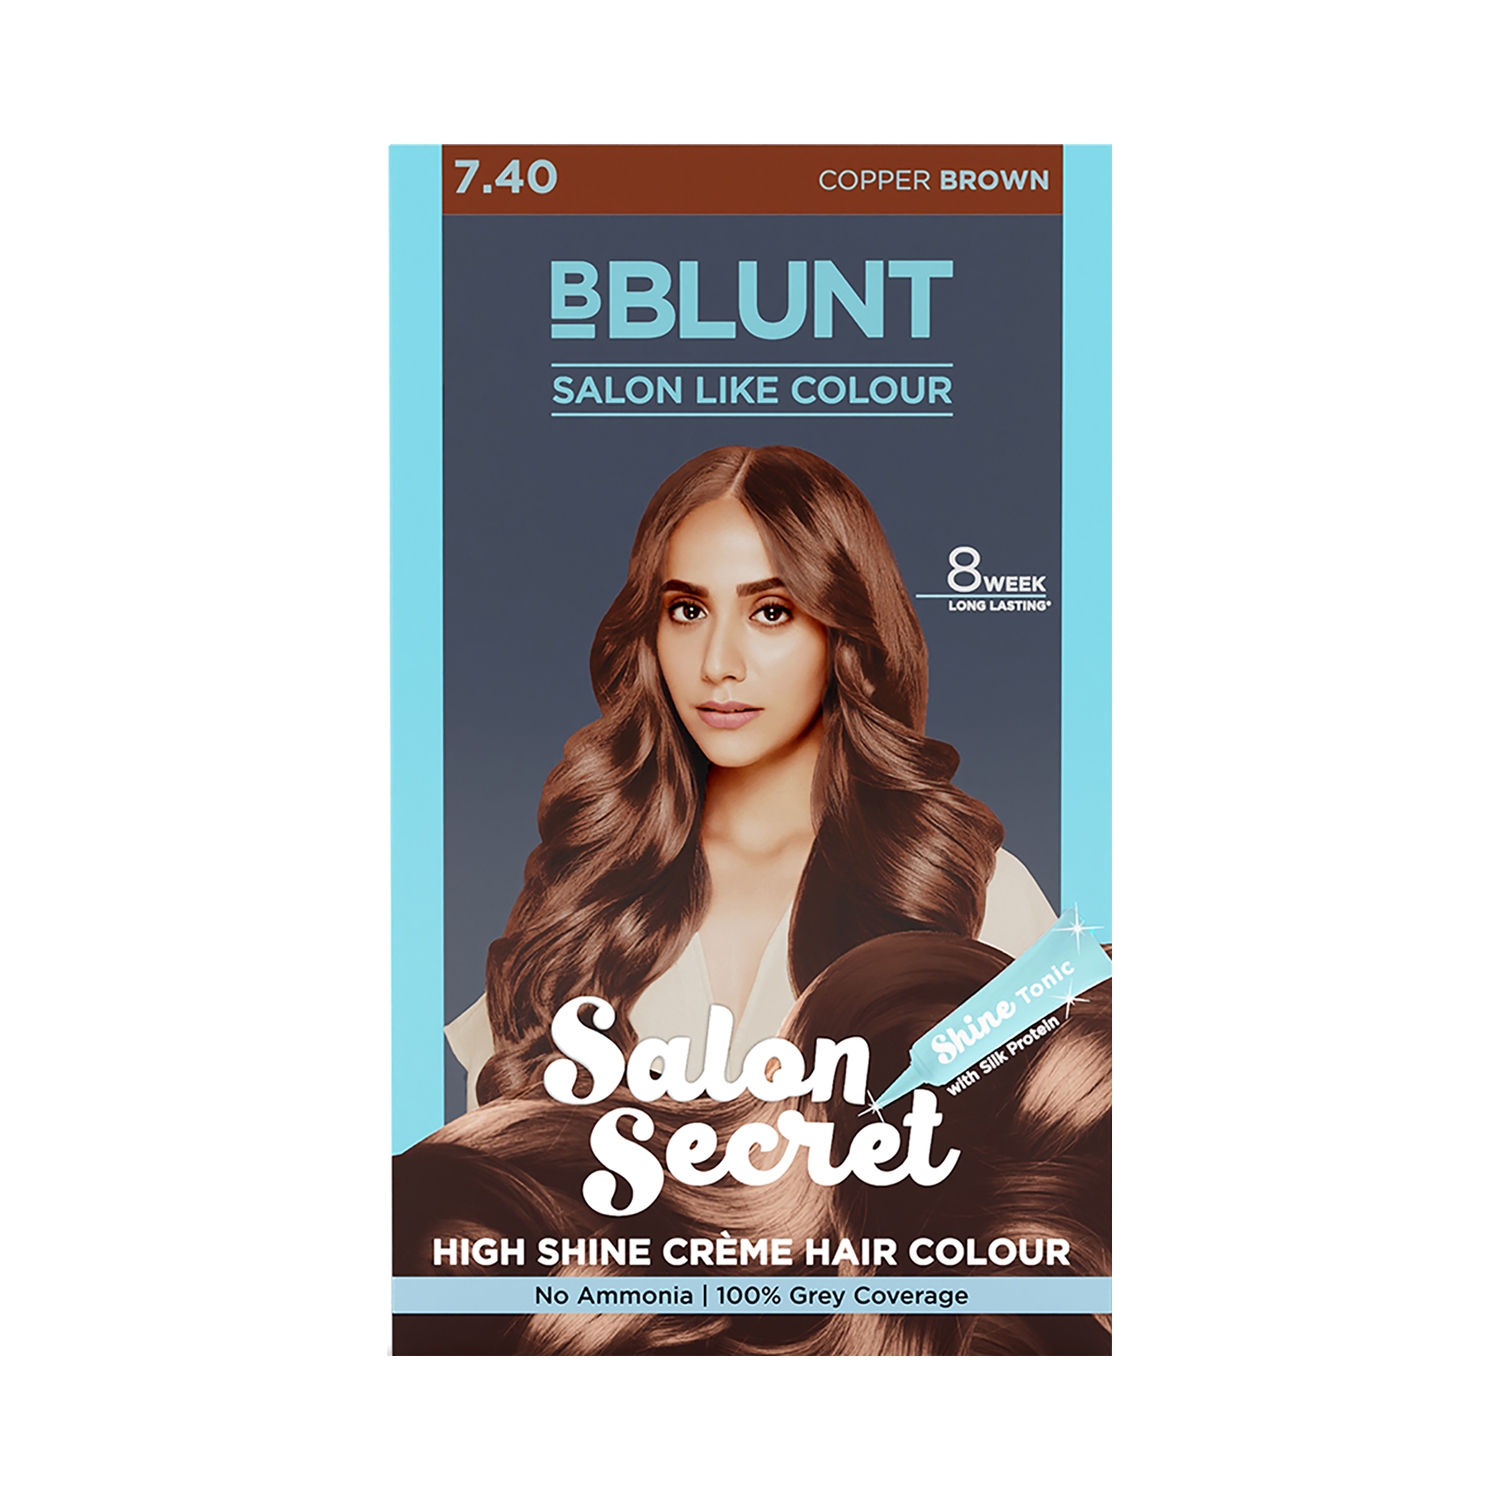 BBlunt Salon Secret High Shine Creme Hair Color - 7.40 Copper Brown (108ml)